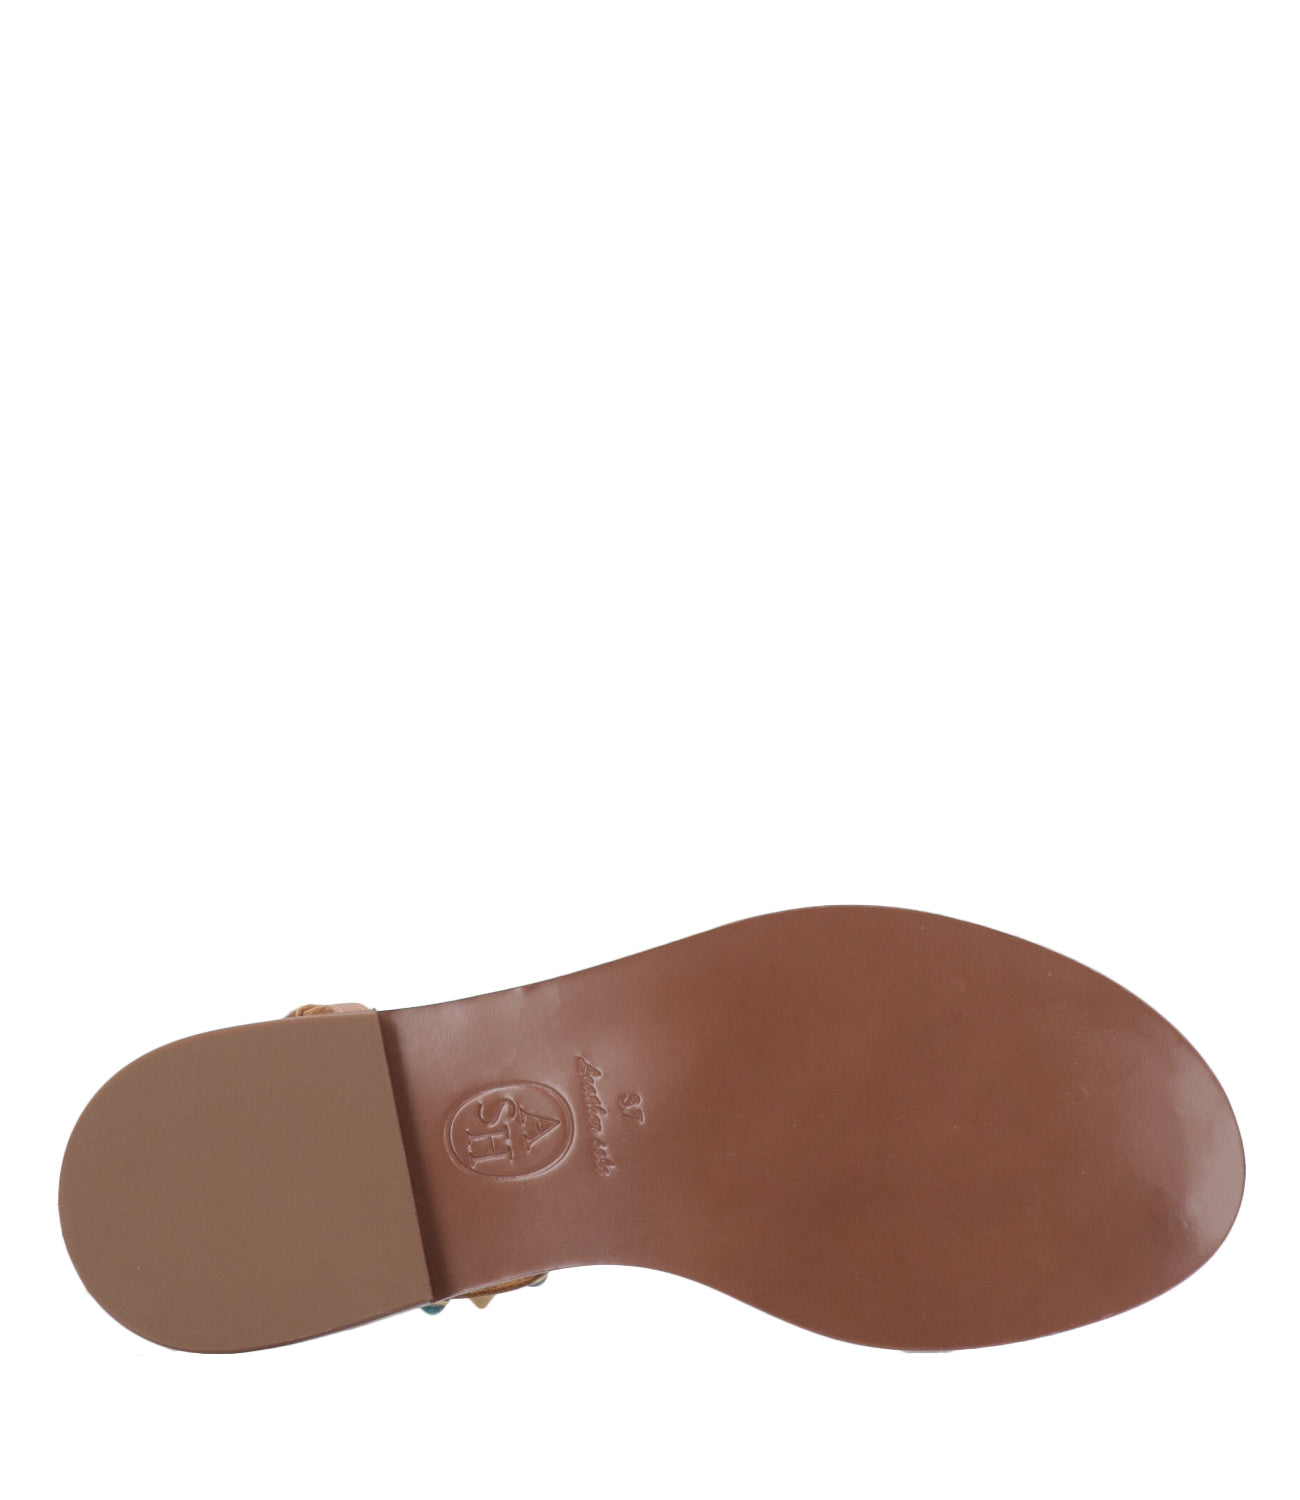 Ash Main | Sandal Party Leather